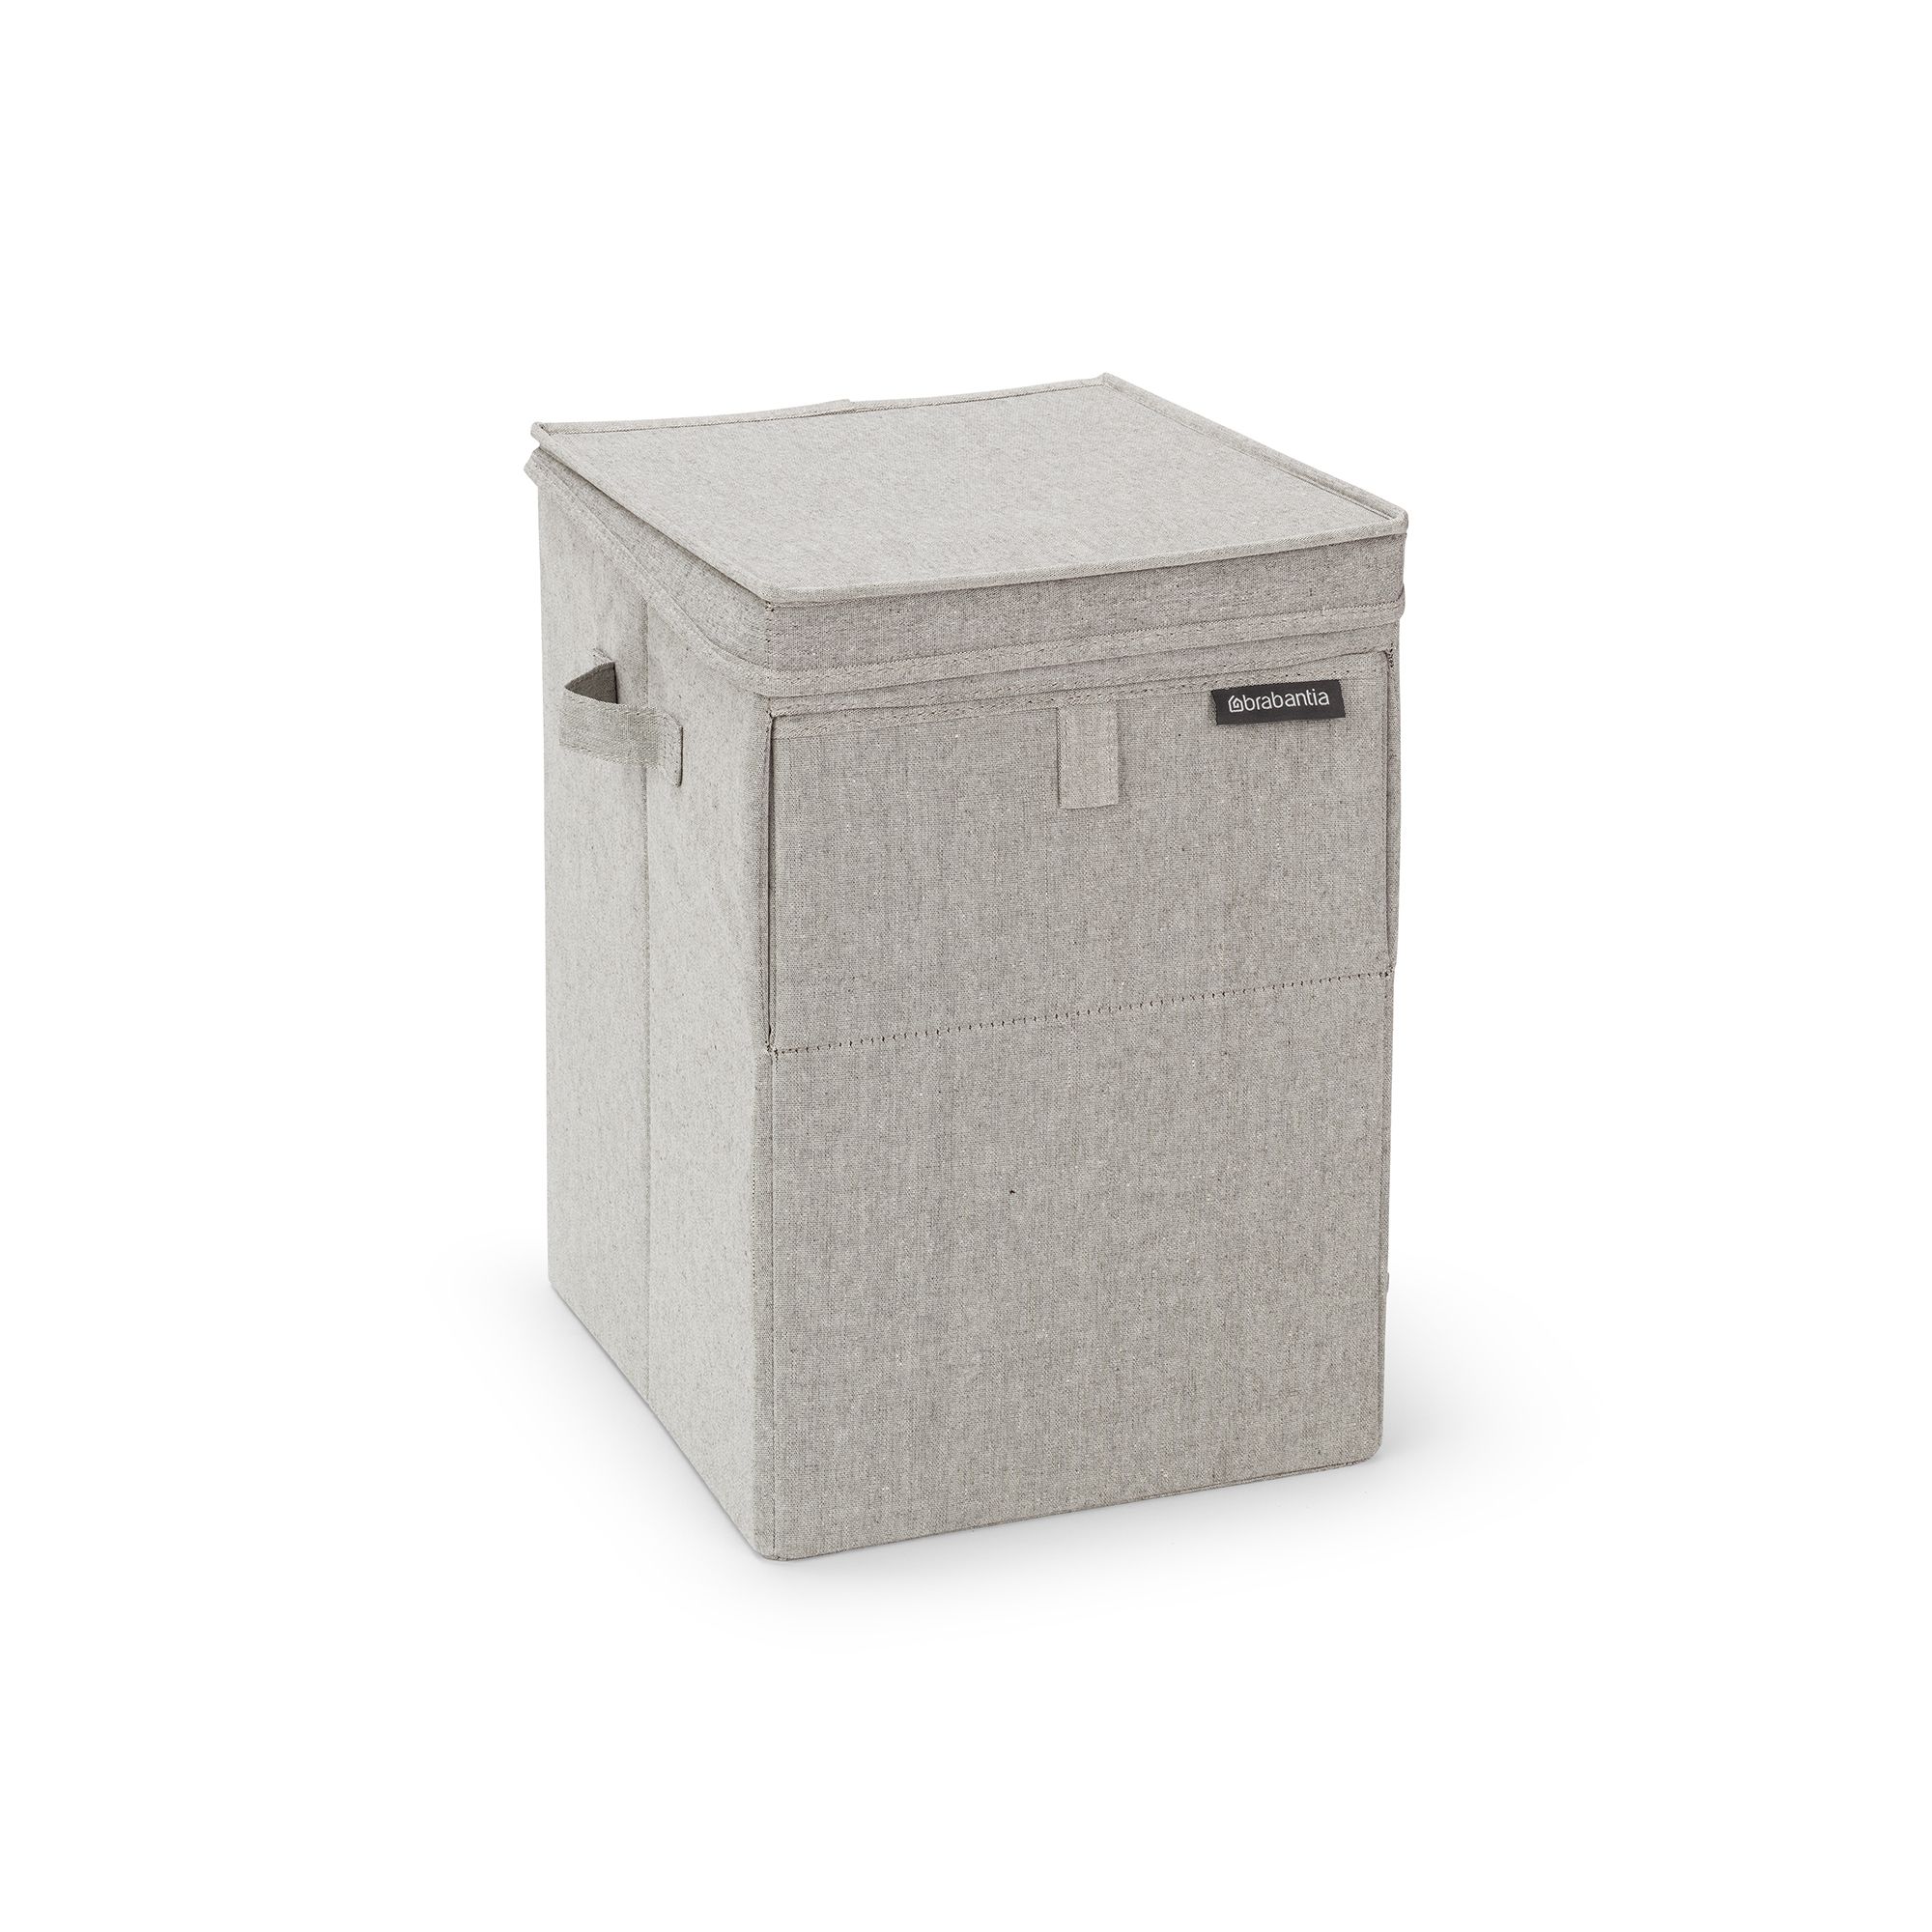 Brabantia Grey Fabric Laundry box, 35L